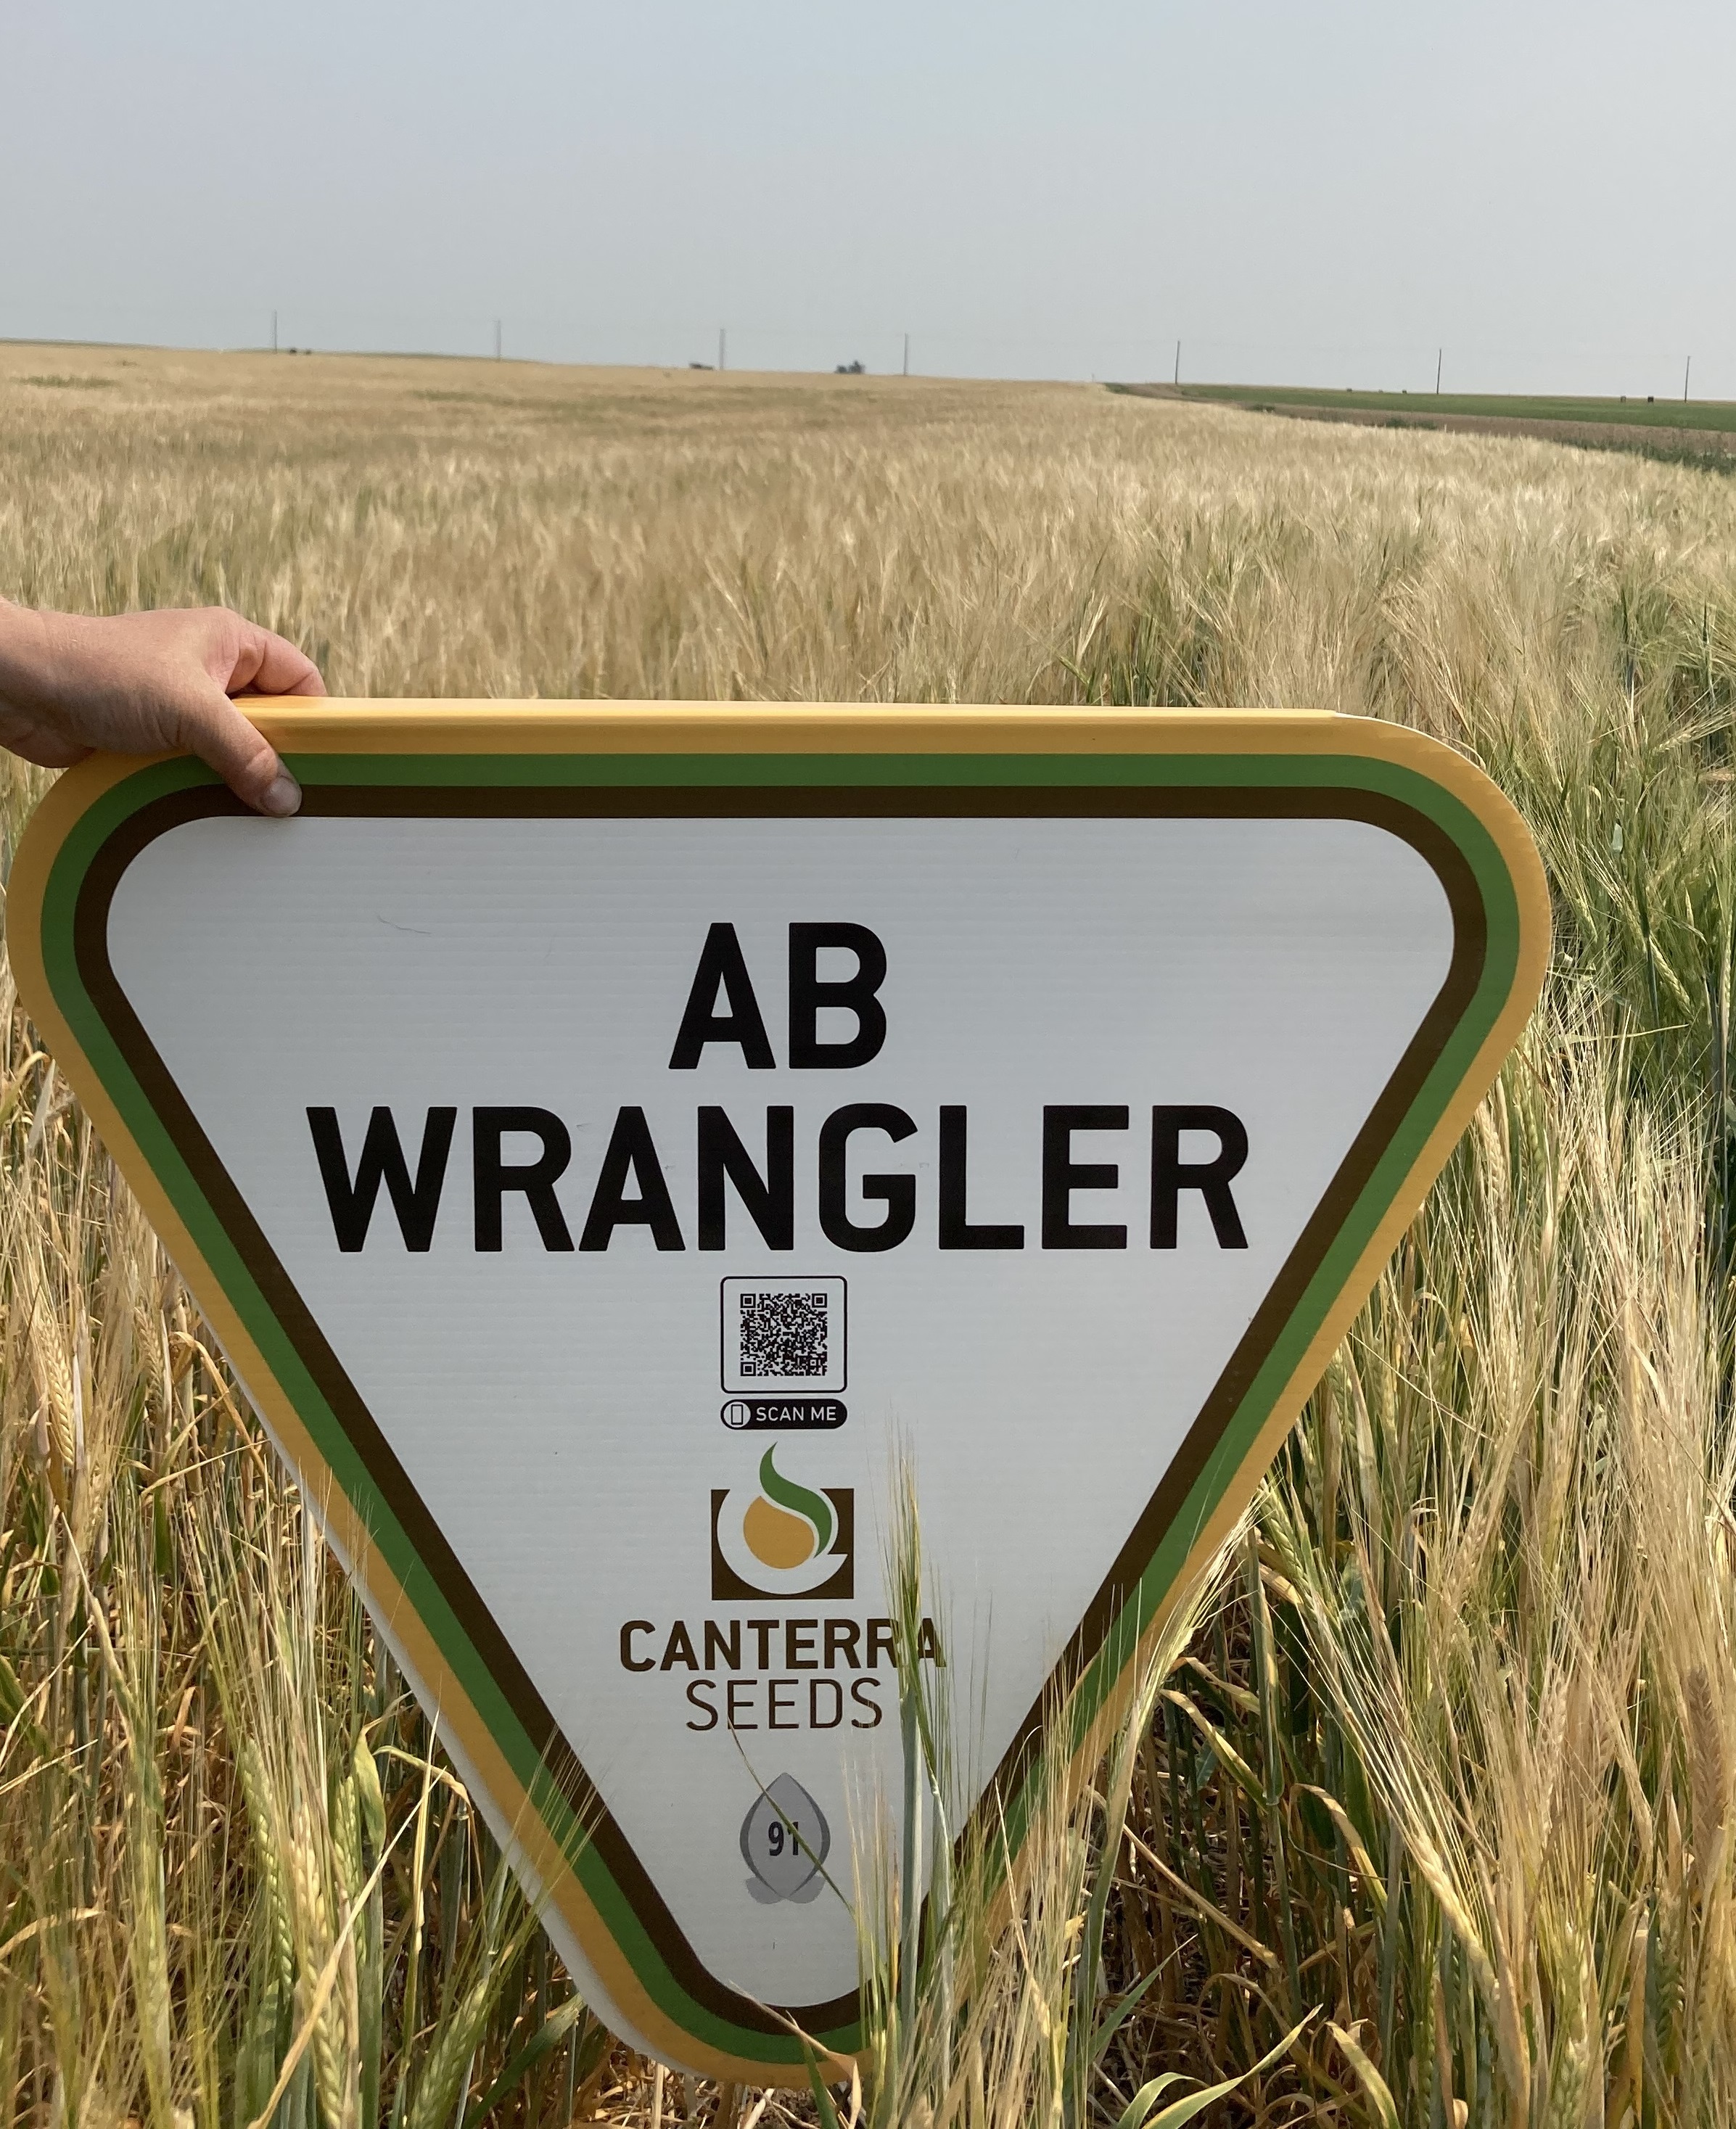 AB Wrangler feed barley is new for seed season 2022!